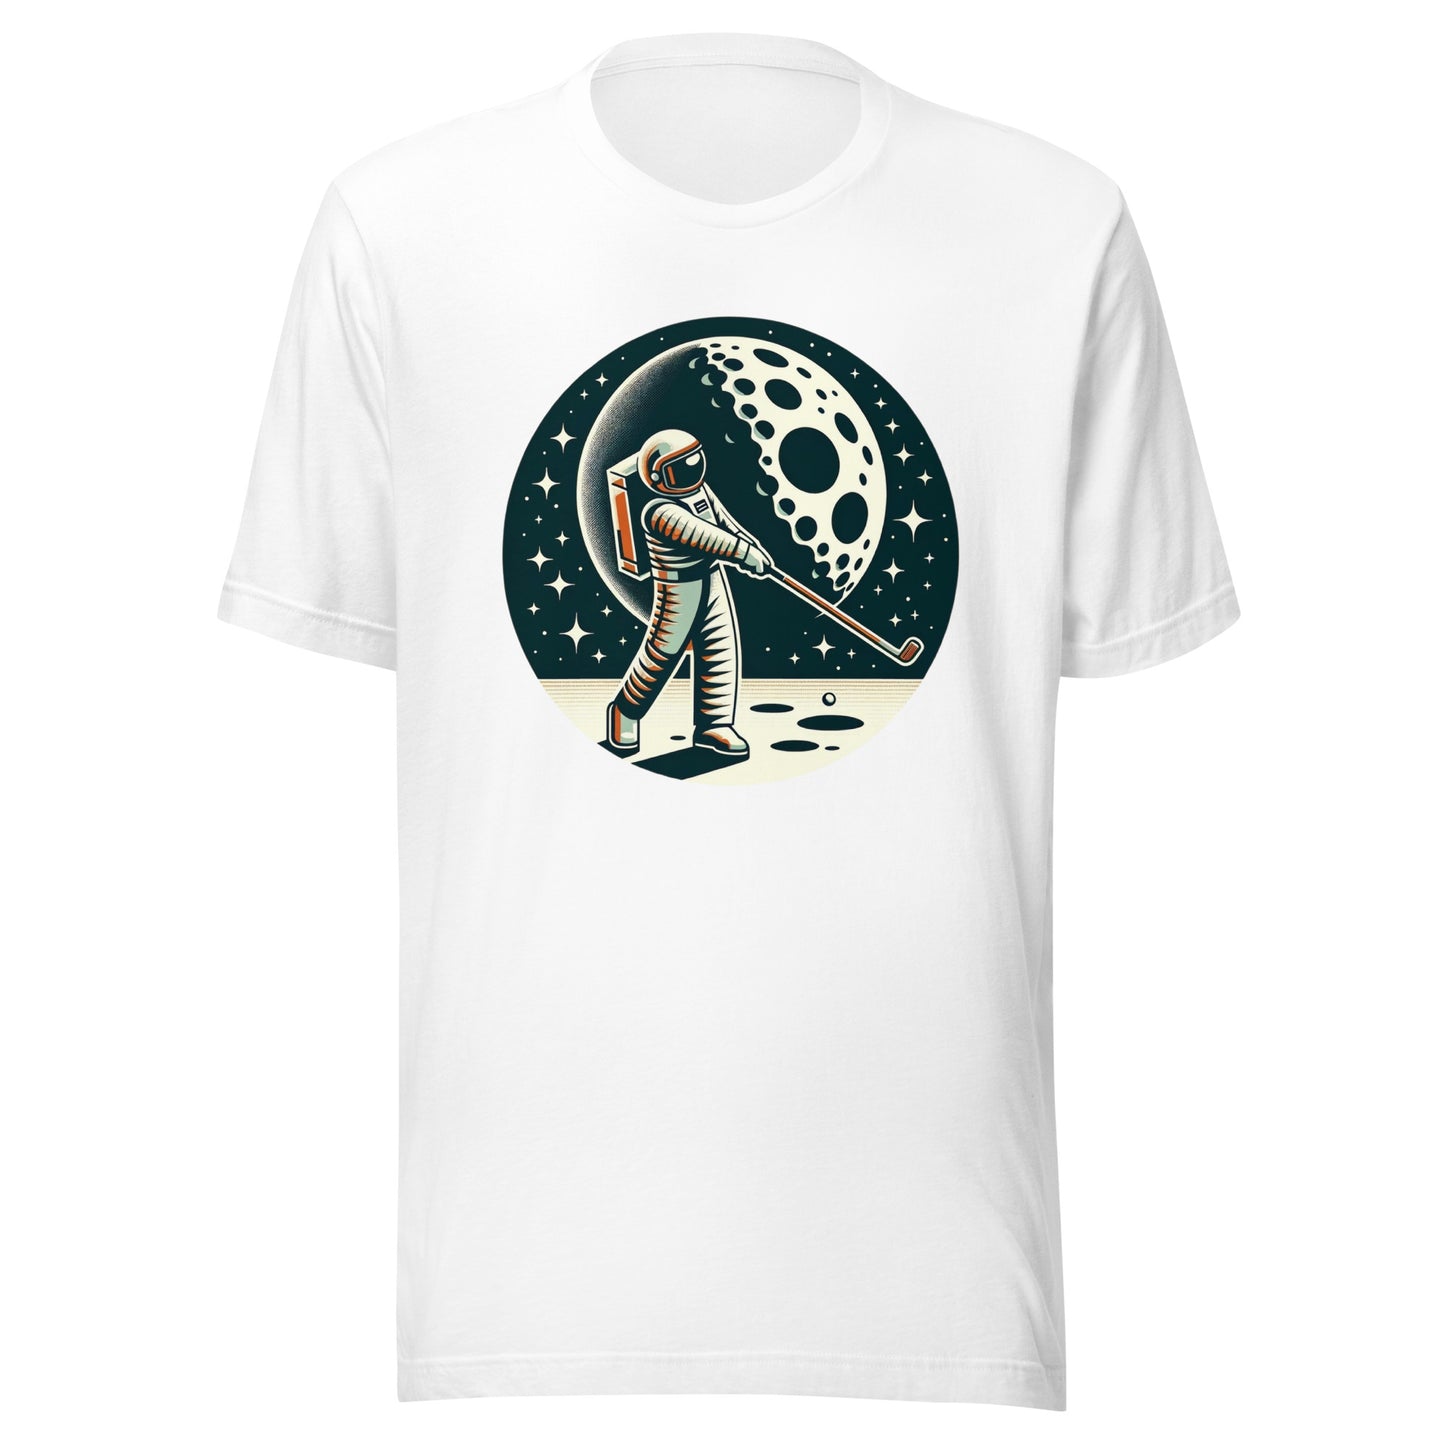 Lunar Golf Club - Driving Over the Moon Unisex t-shirt